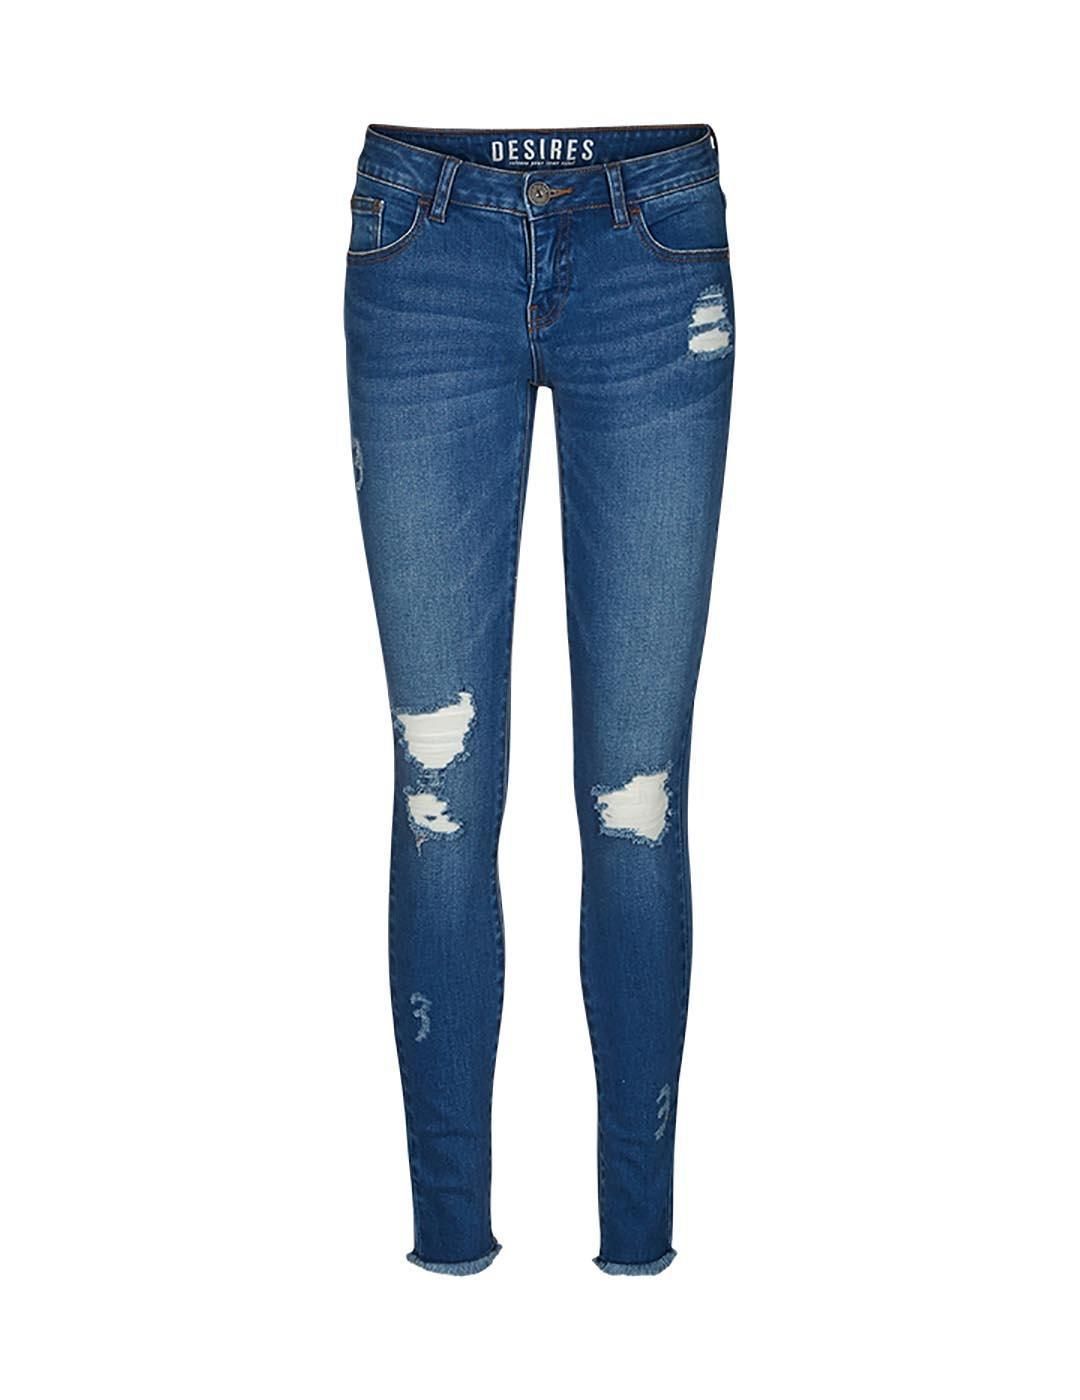 Jeans DESIRES Lola Blue Destroy - Bicos de Fío